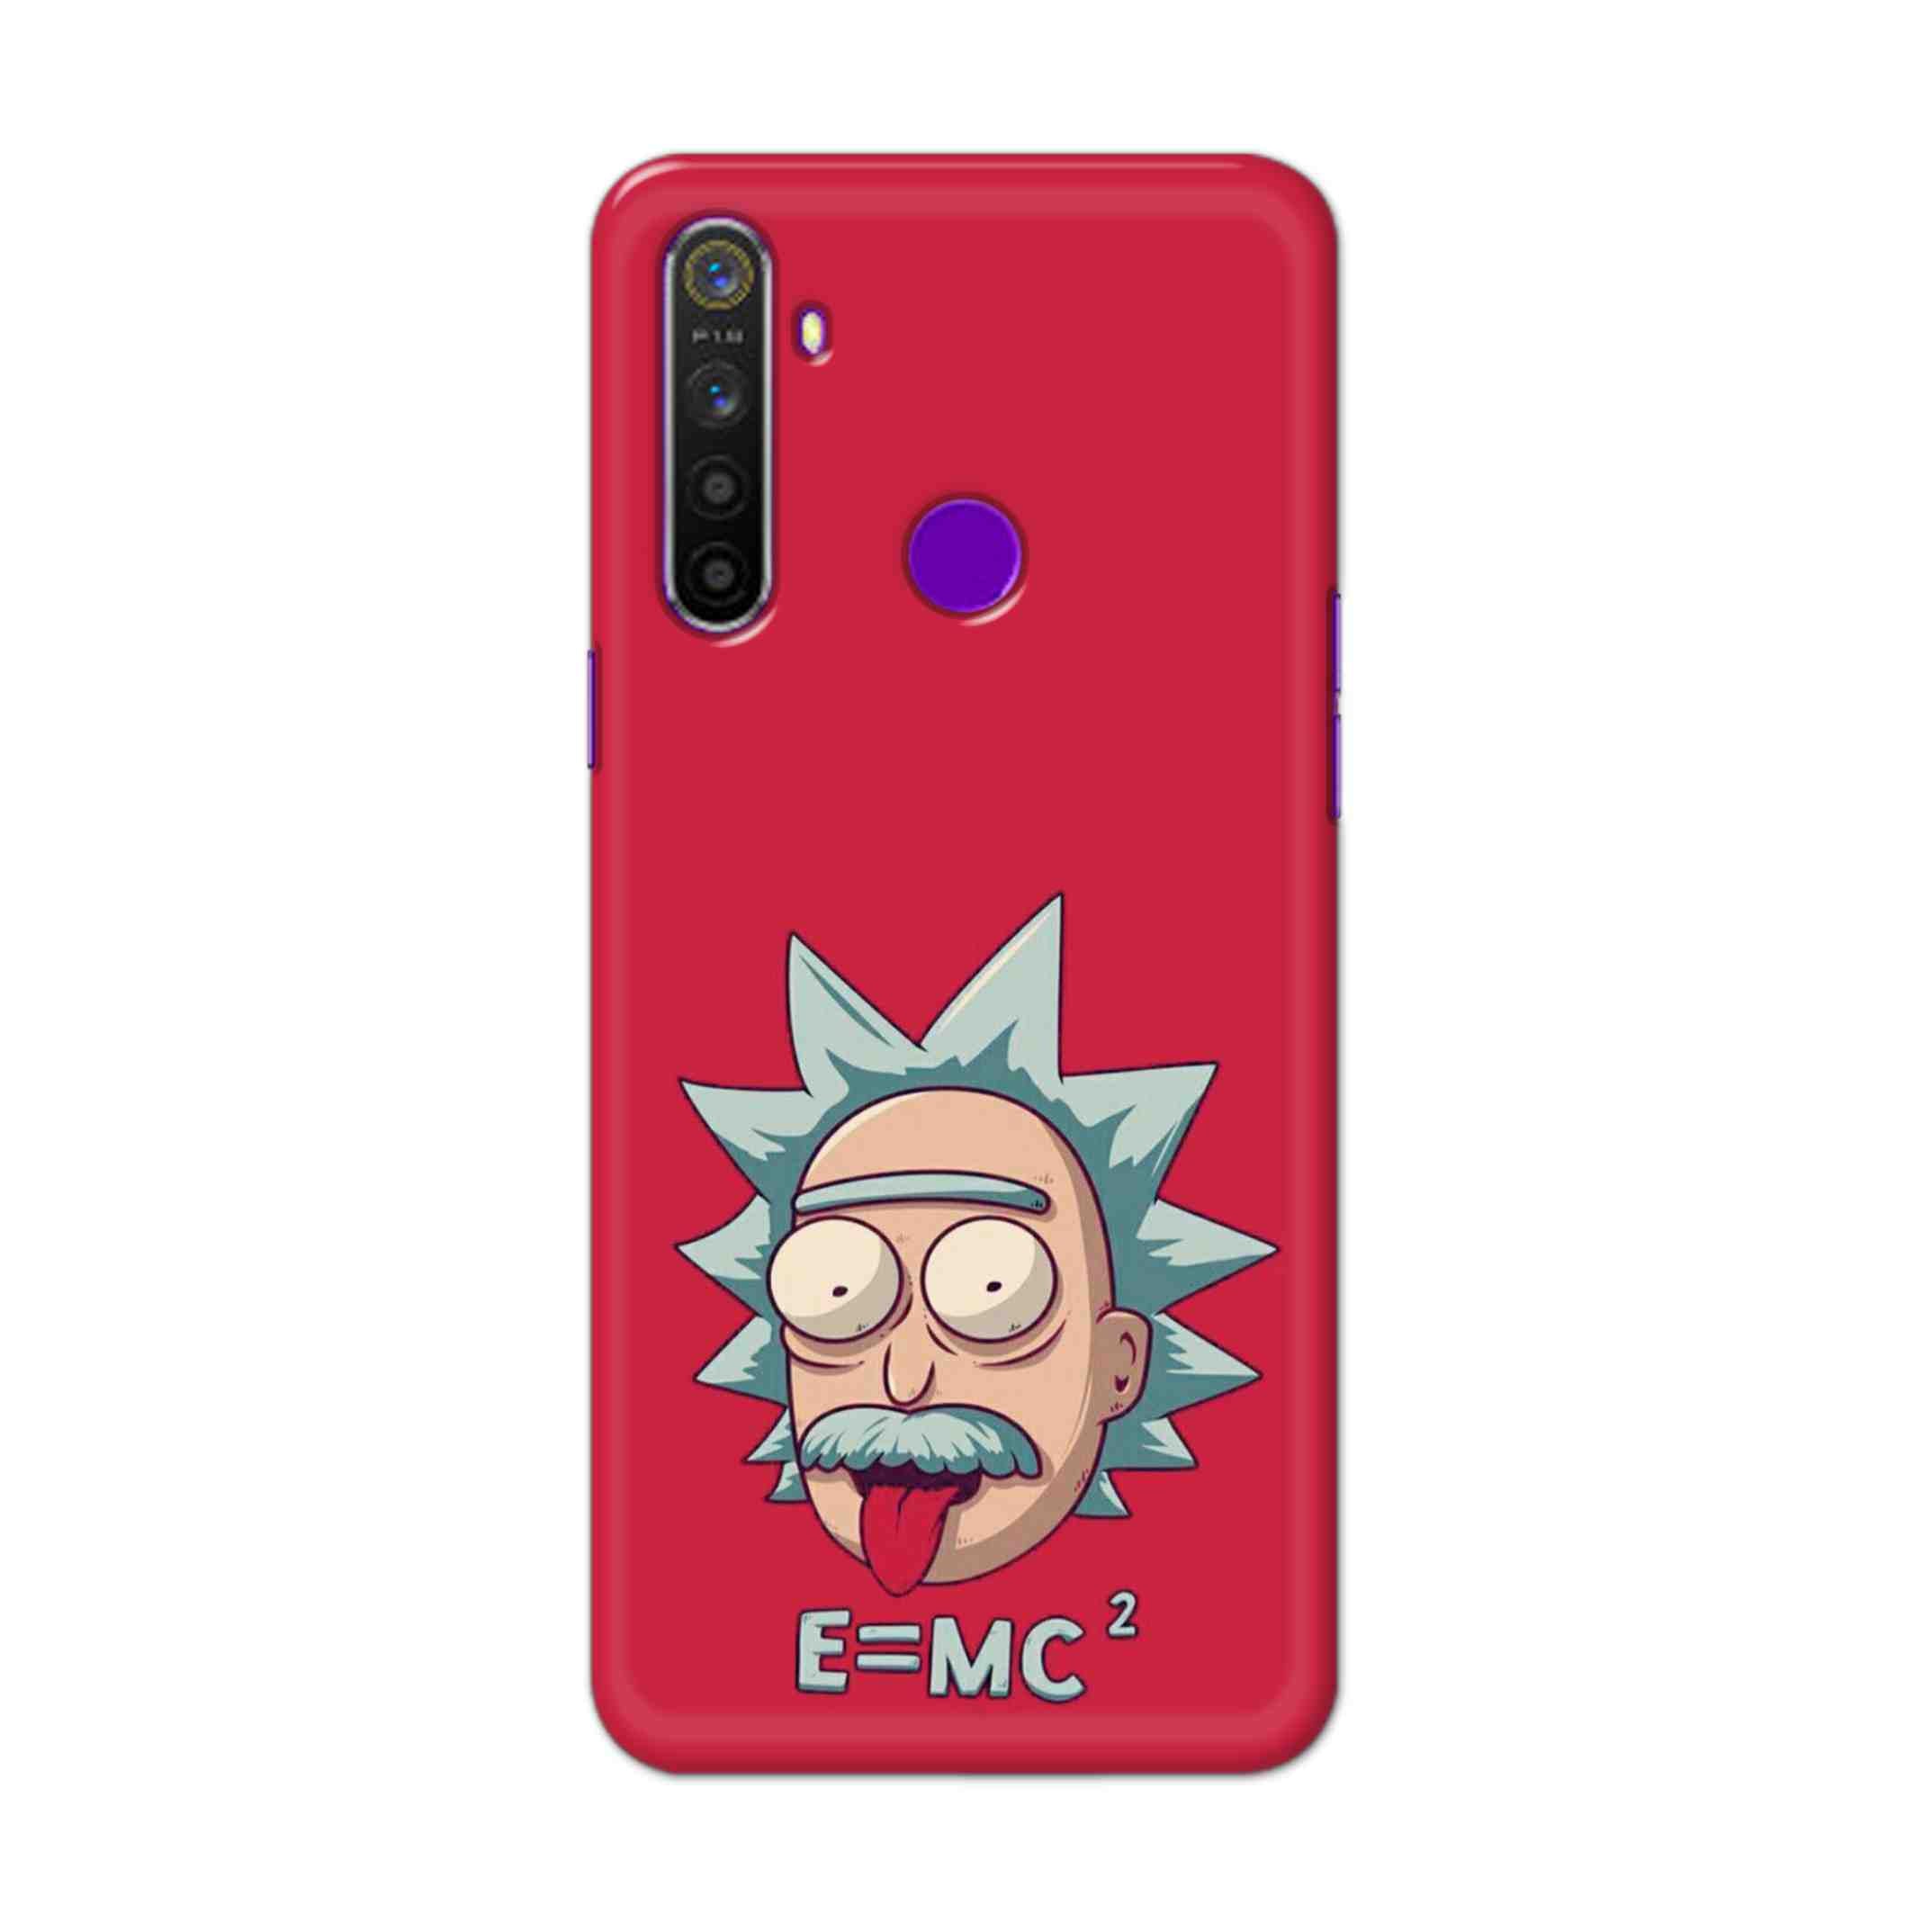 Buy E=Mc Hard Back Mobile Phone Case Cover For Realme 5 Pro Online